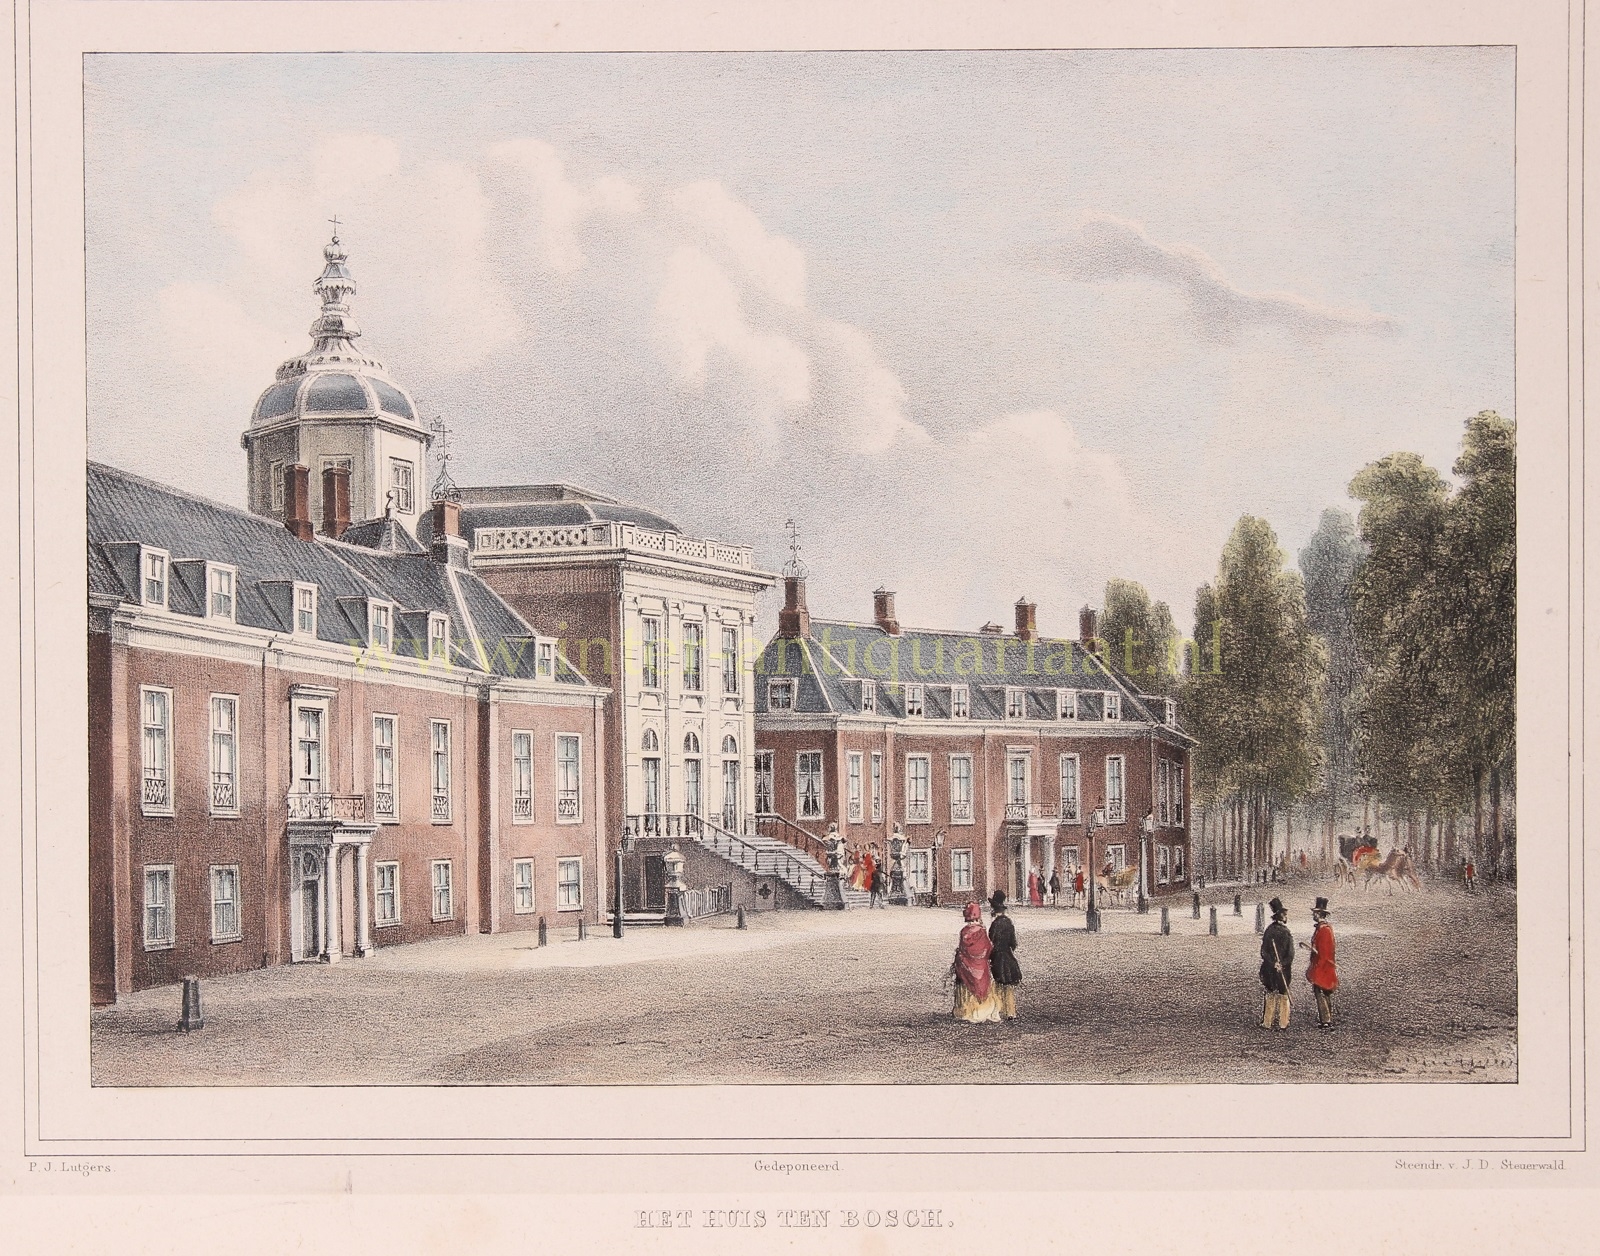 Lutgers-- Petrus Josephus - Huis ten Bosch palace (The Hague) - Petrus Josephus Lutgers, 1855